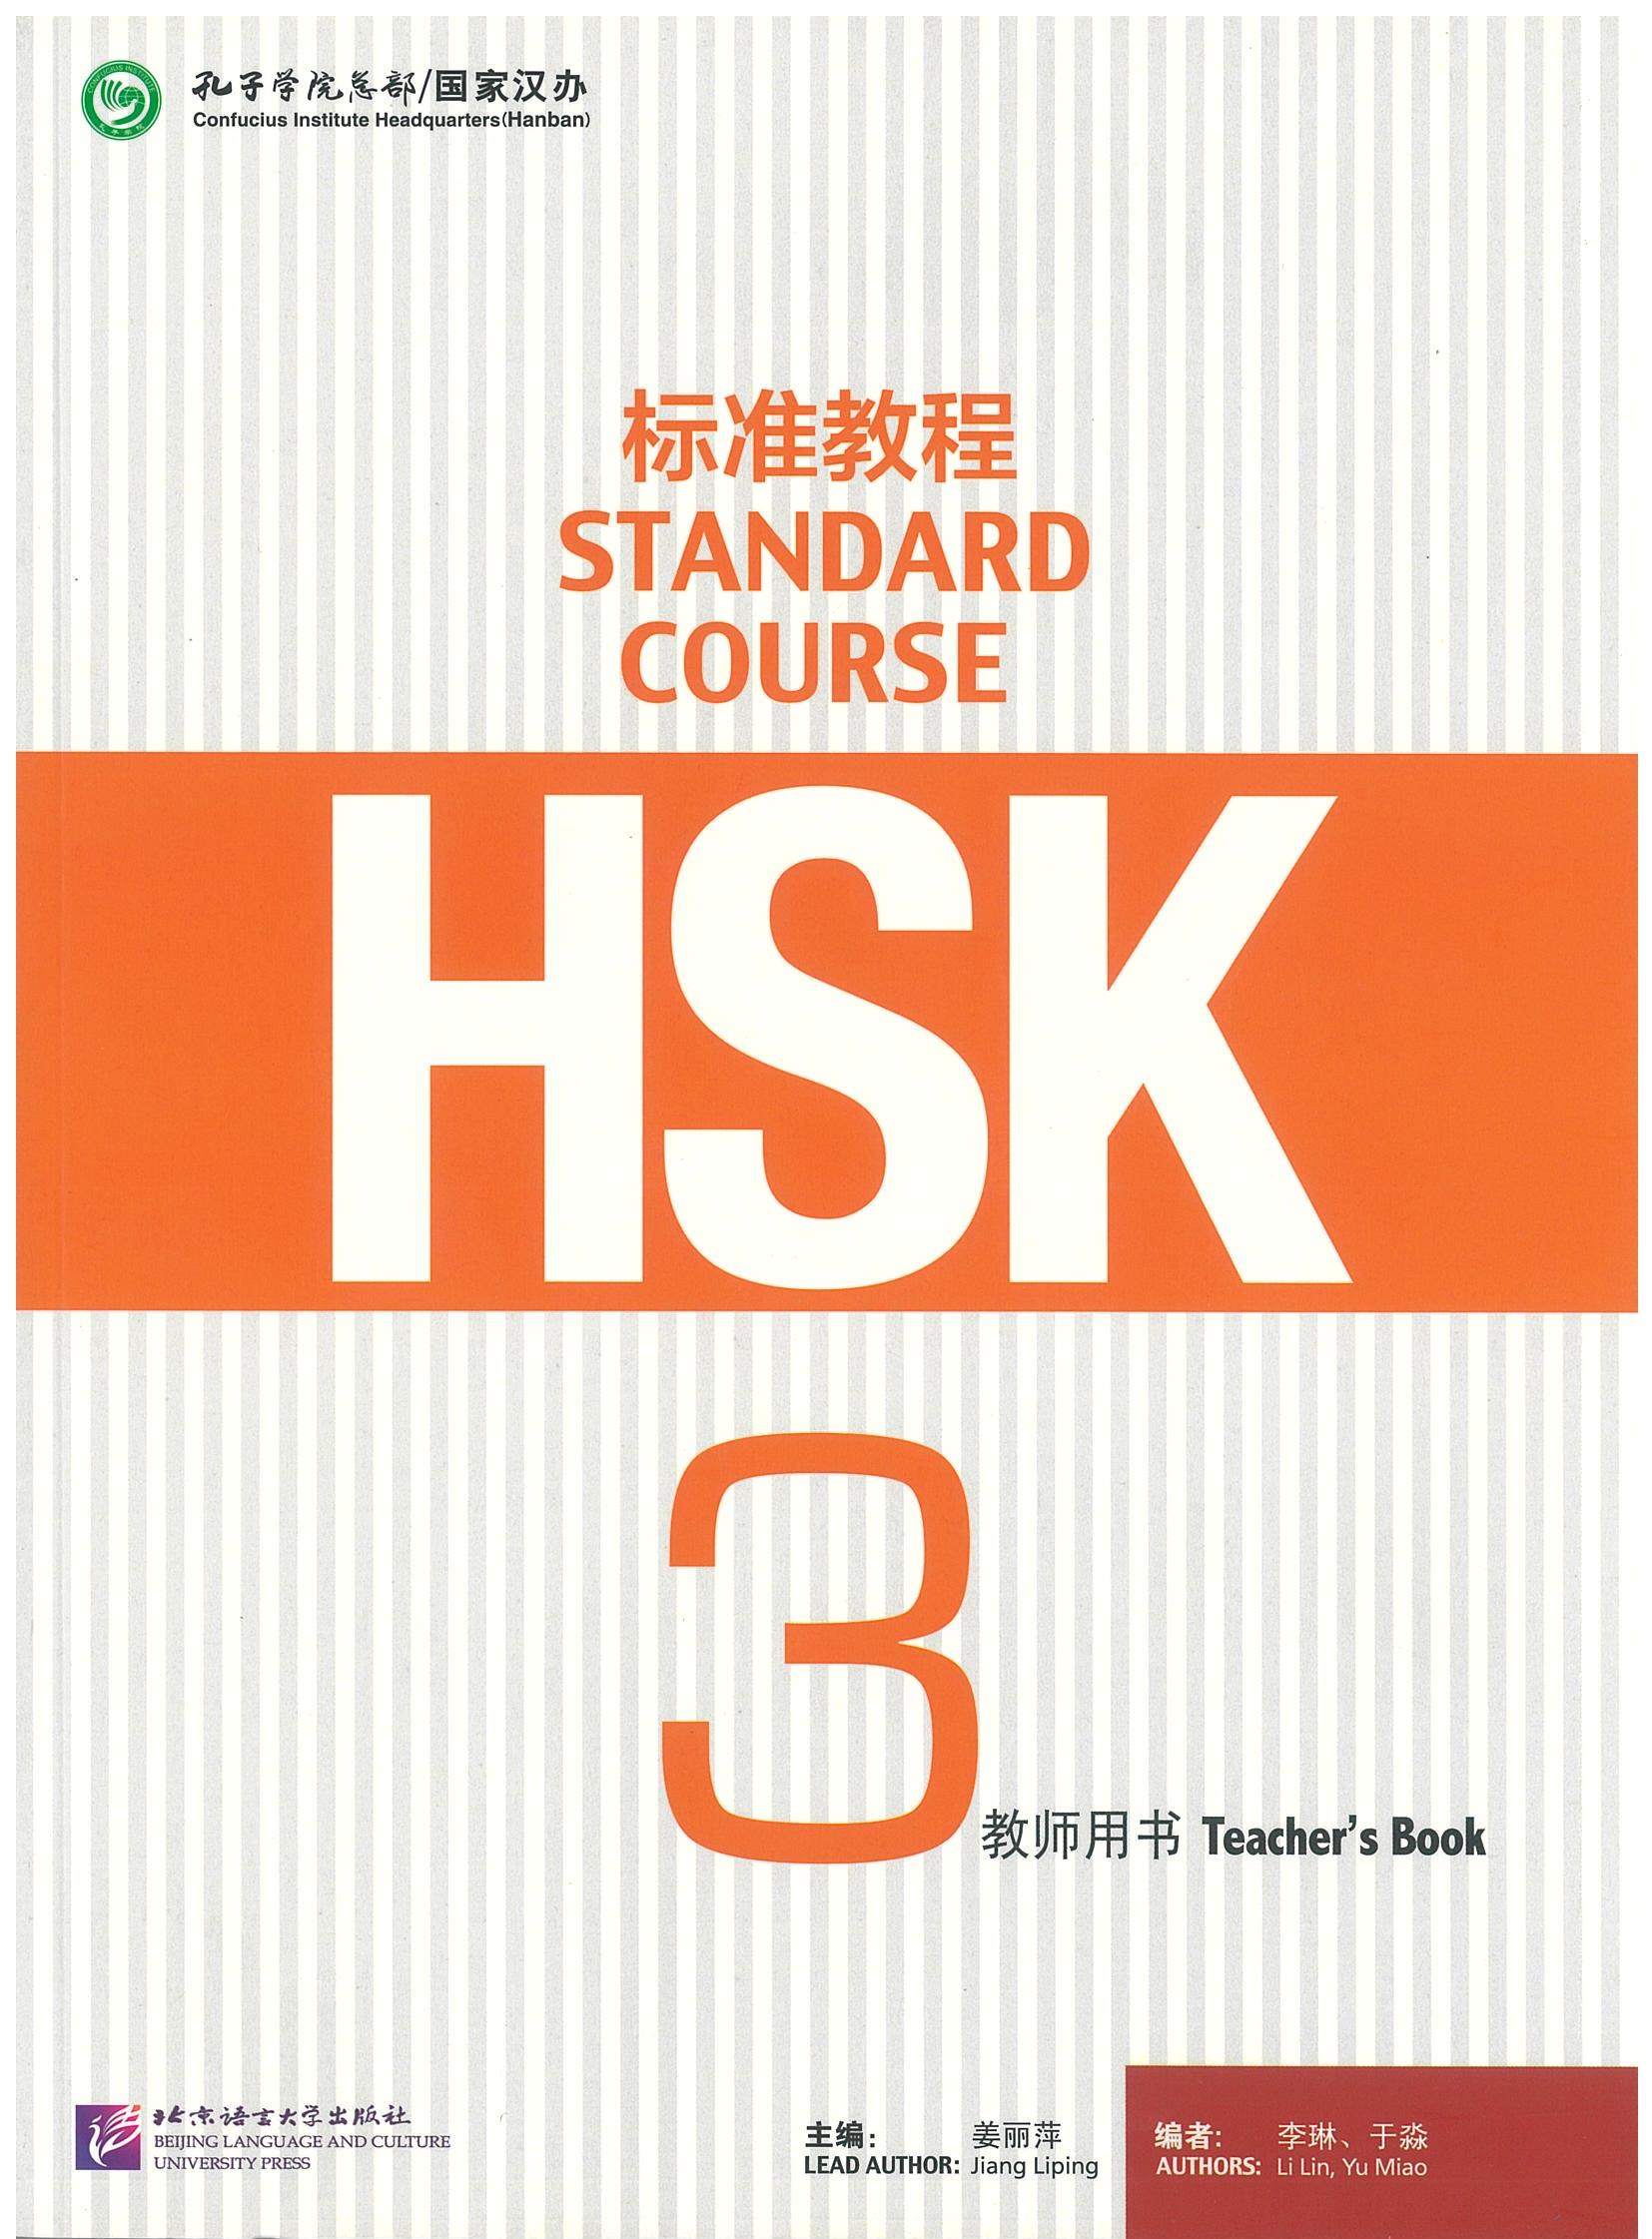 Stand Couse HSK 3 Teacher's Book 标准教程 3 教师用书